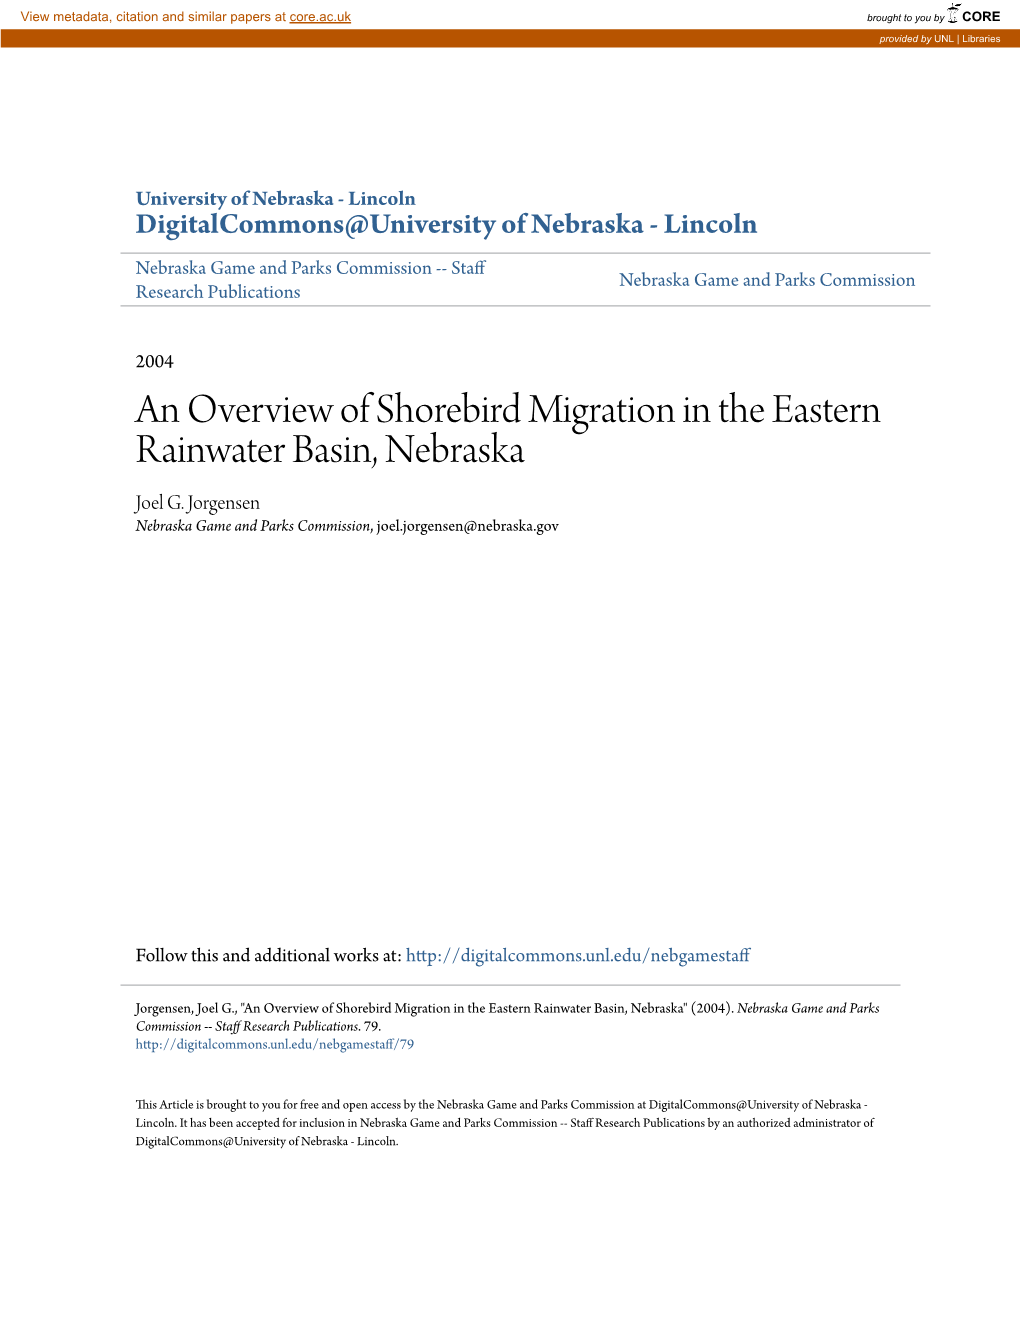 An Overview of Shorebird Migration in the Eastern Rainwater Basin, Nebraska Joel G